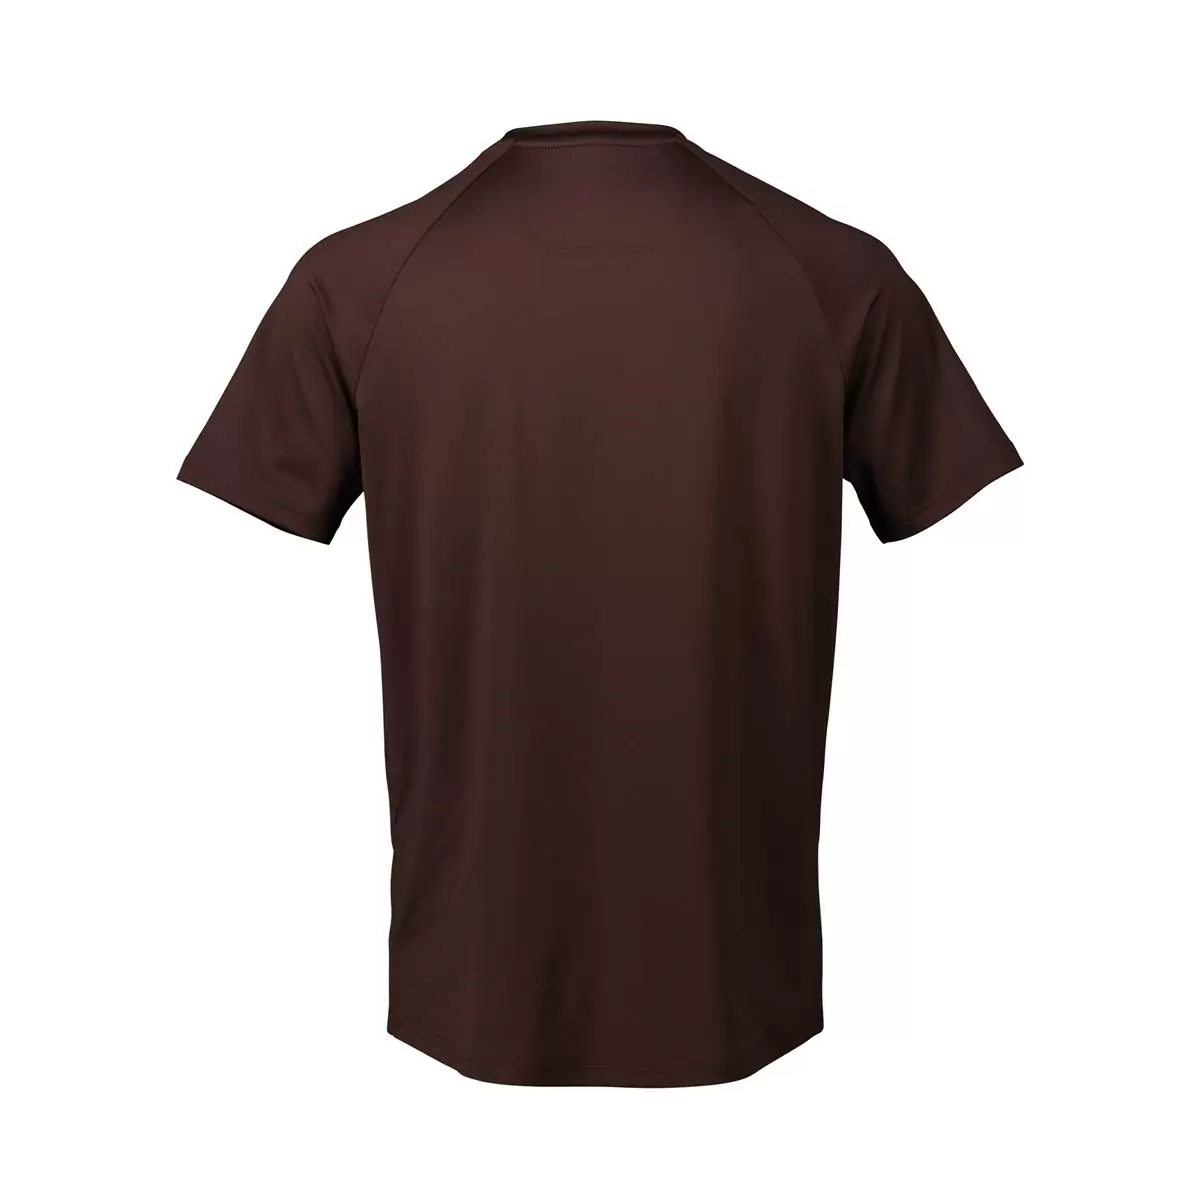 T-shirt Reform Enduro Axinite Marron taille S #1